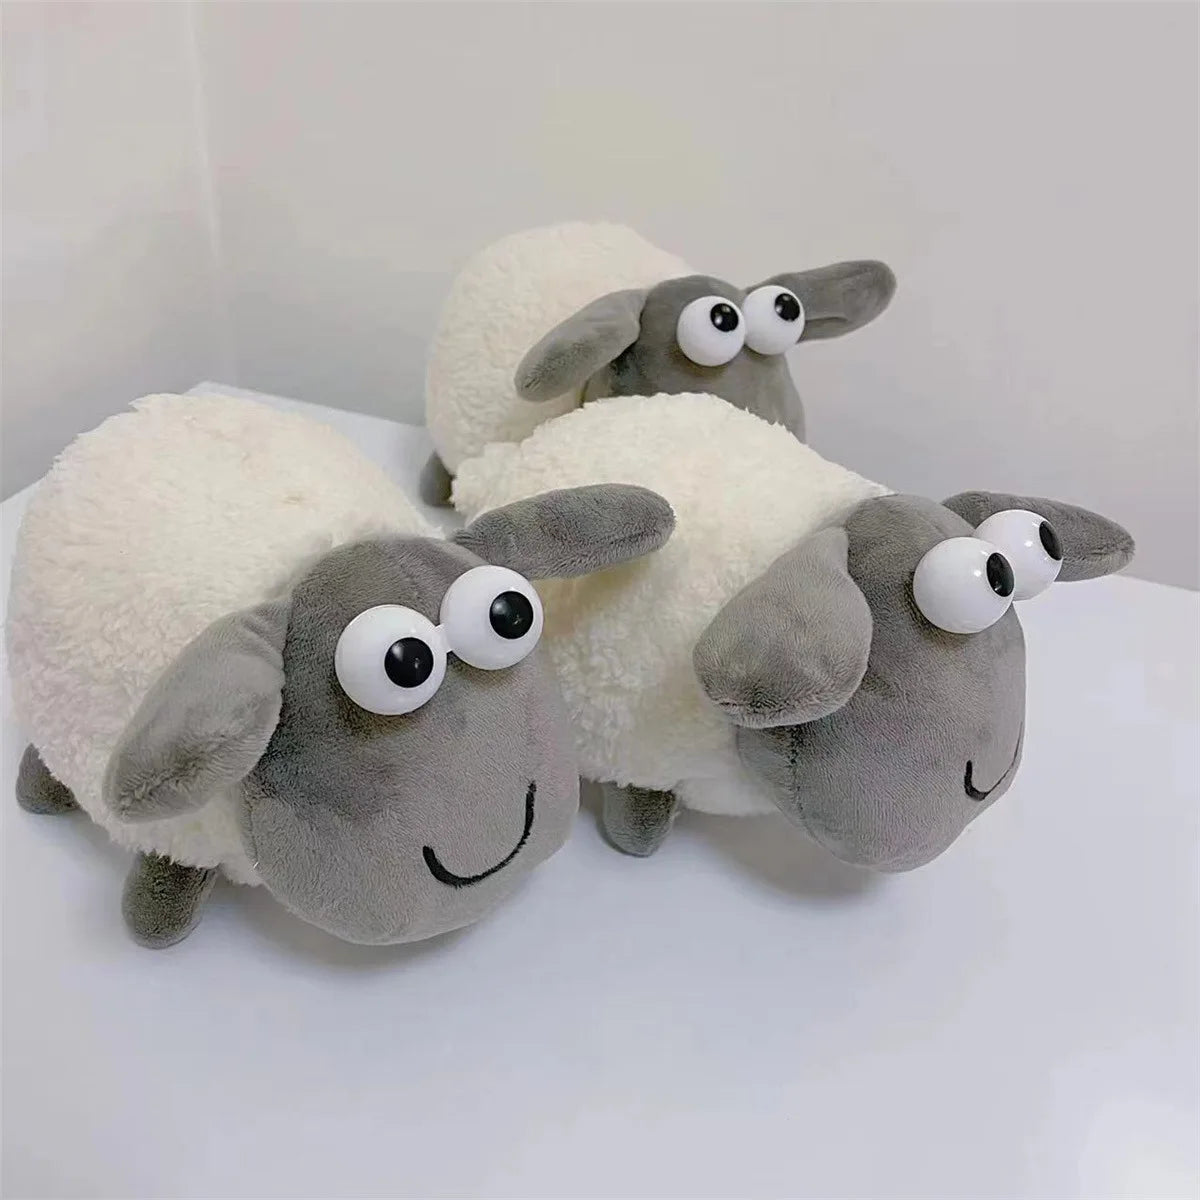 100/80/60/40cm stuffed animals sheep doll cute soft fluffy plush toys for kids boys girls Alliswell Apparel Store